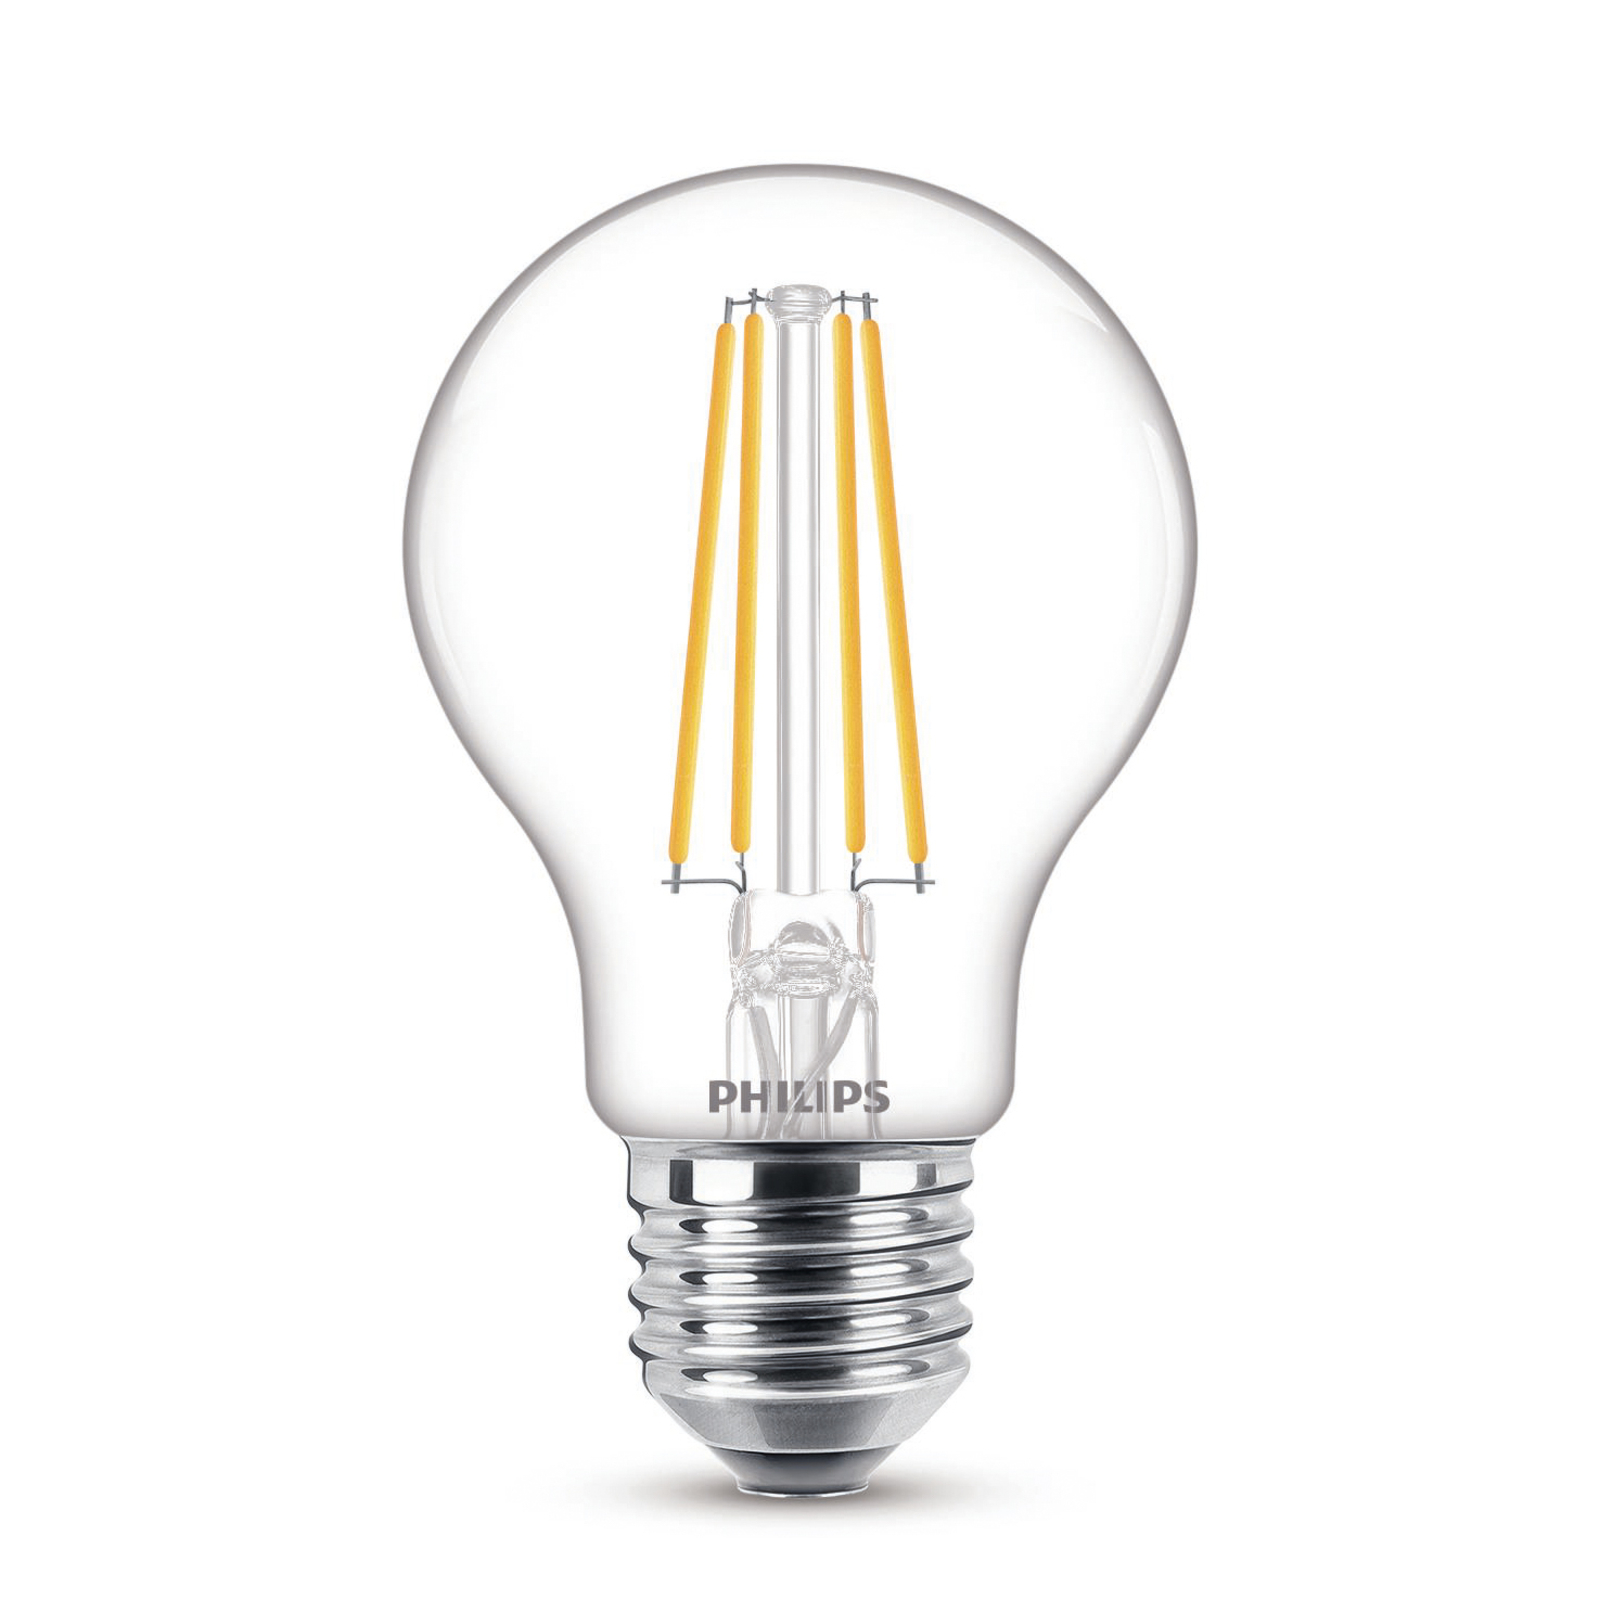 Philips LED bulb E27 7W 850lm 4,000K clear 6-pack